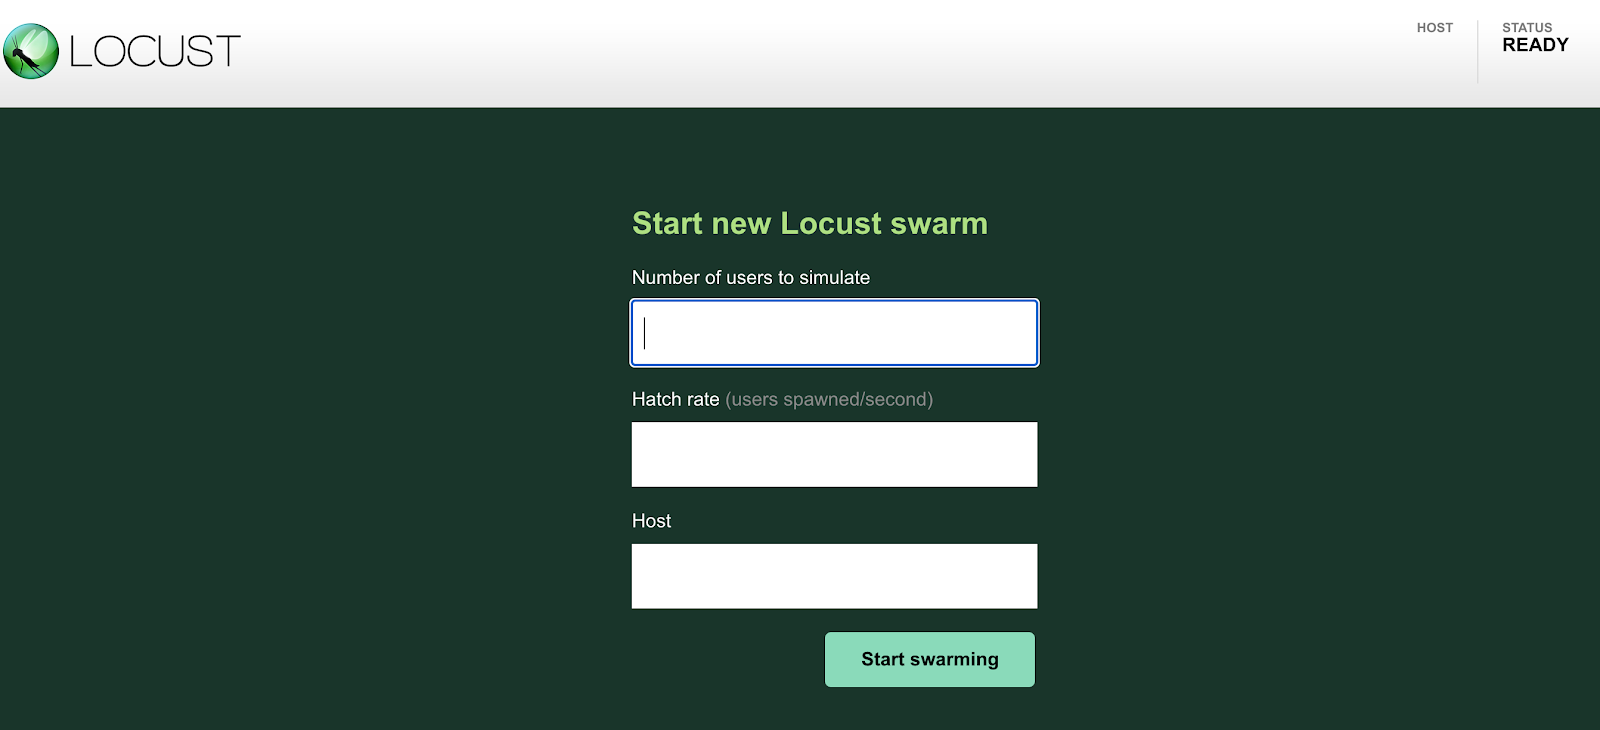 The Locust load generator page